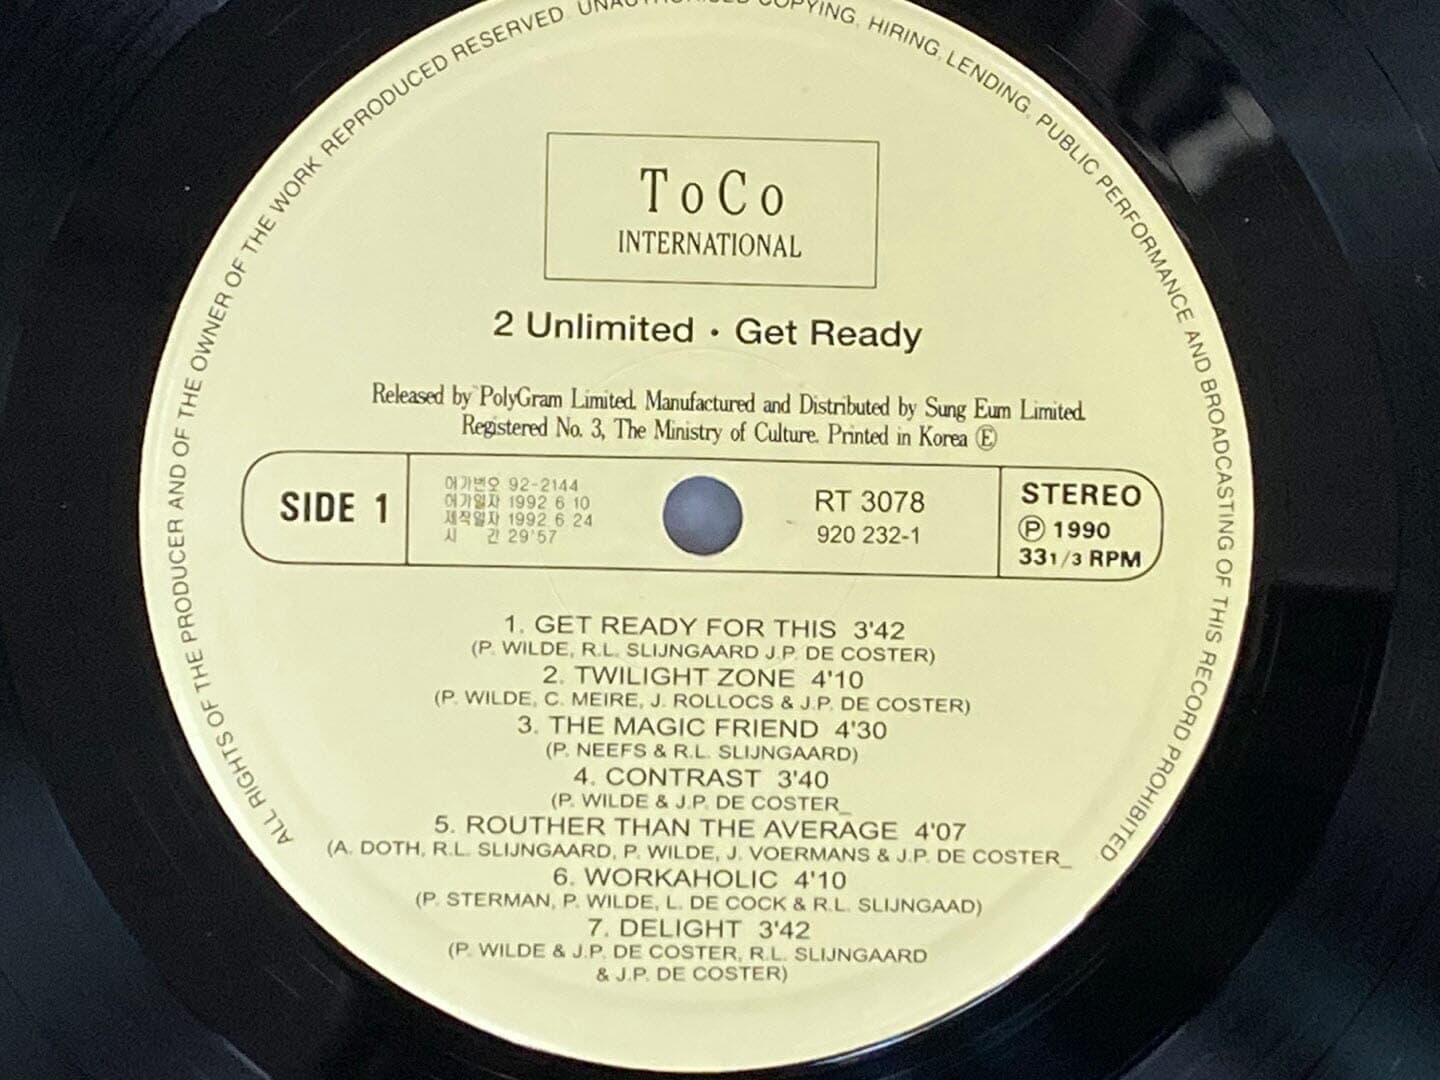 [LP] 투 언리미티드 - 2 Unlimited - Get Ready! LP [성음-라이센스반]